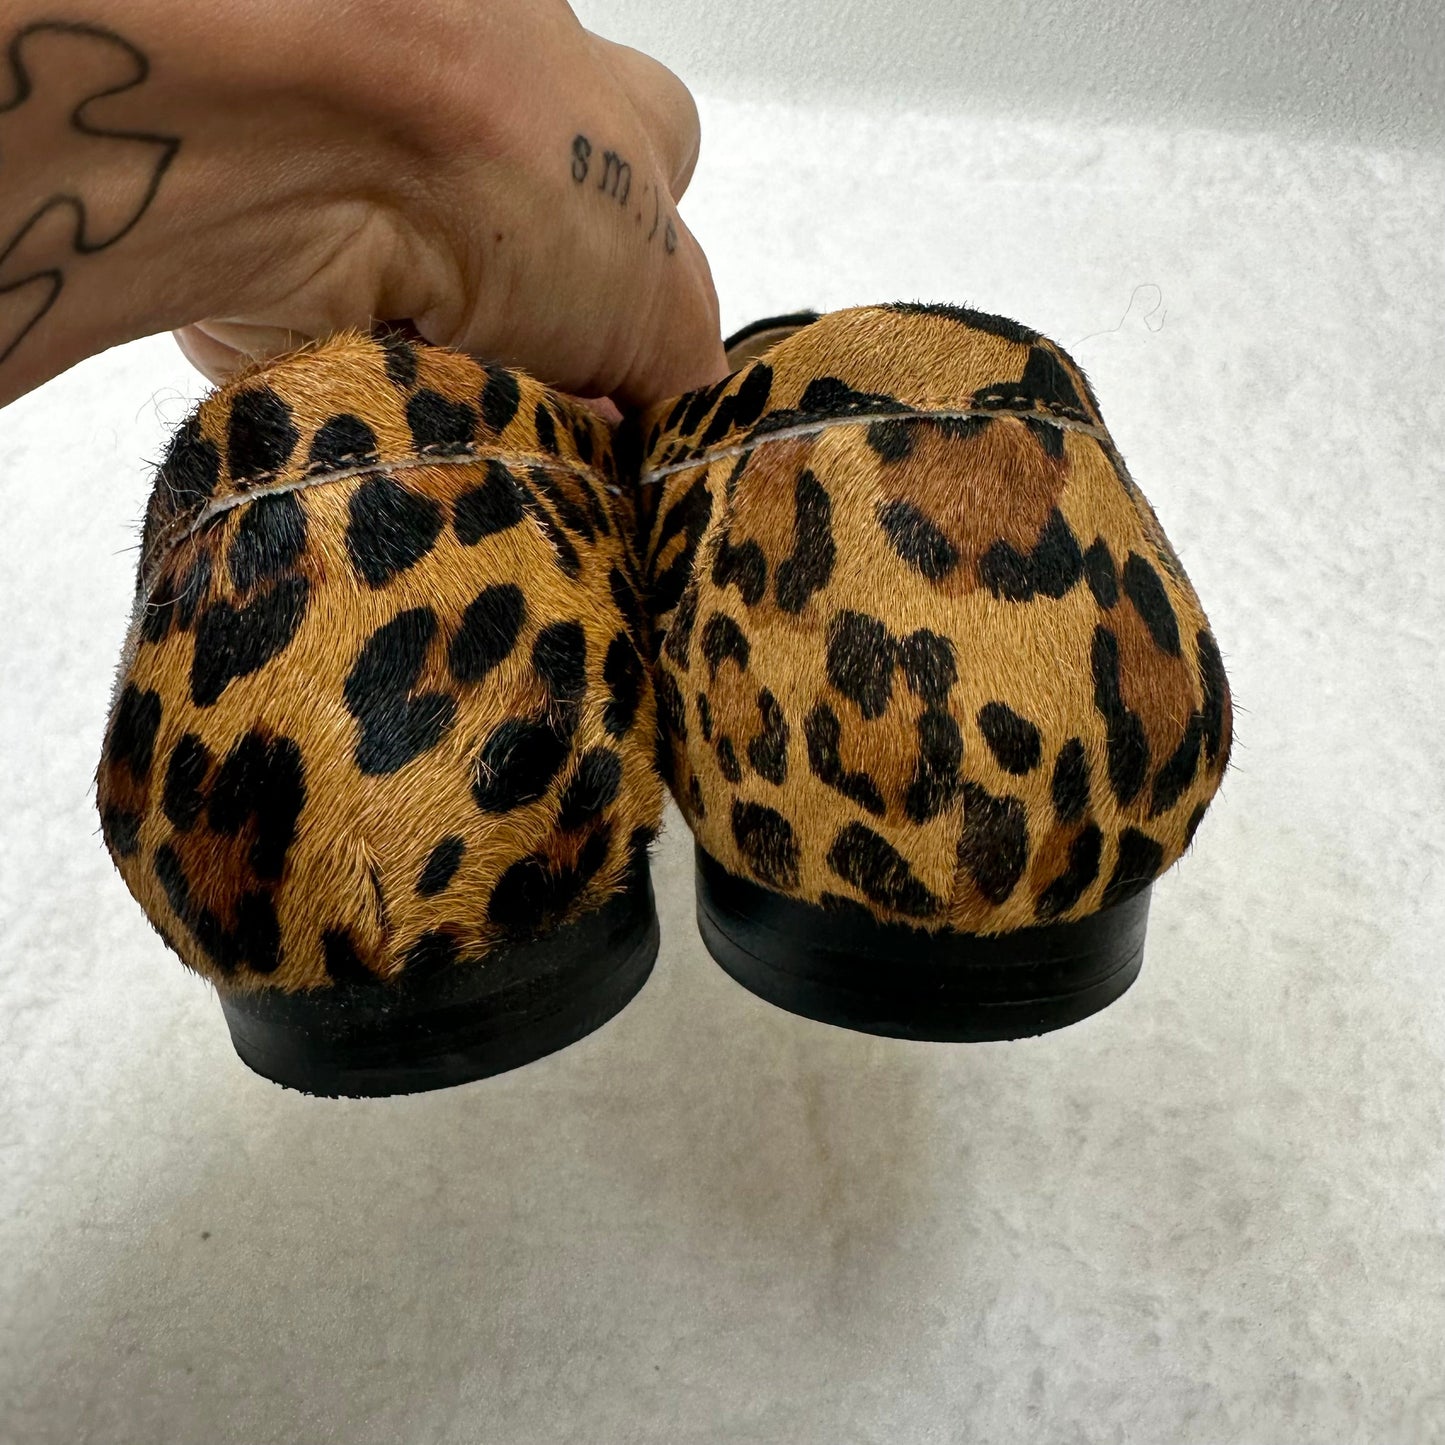 Leopard Print Shoes Flats Ballet Charter Club O, Size 7.5